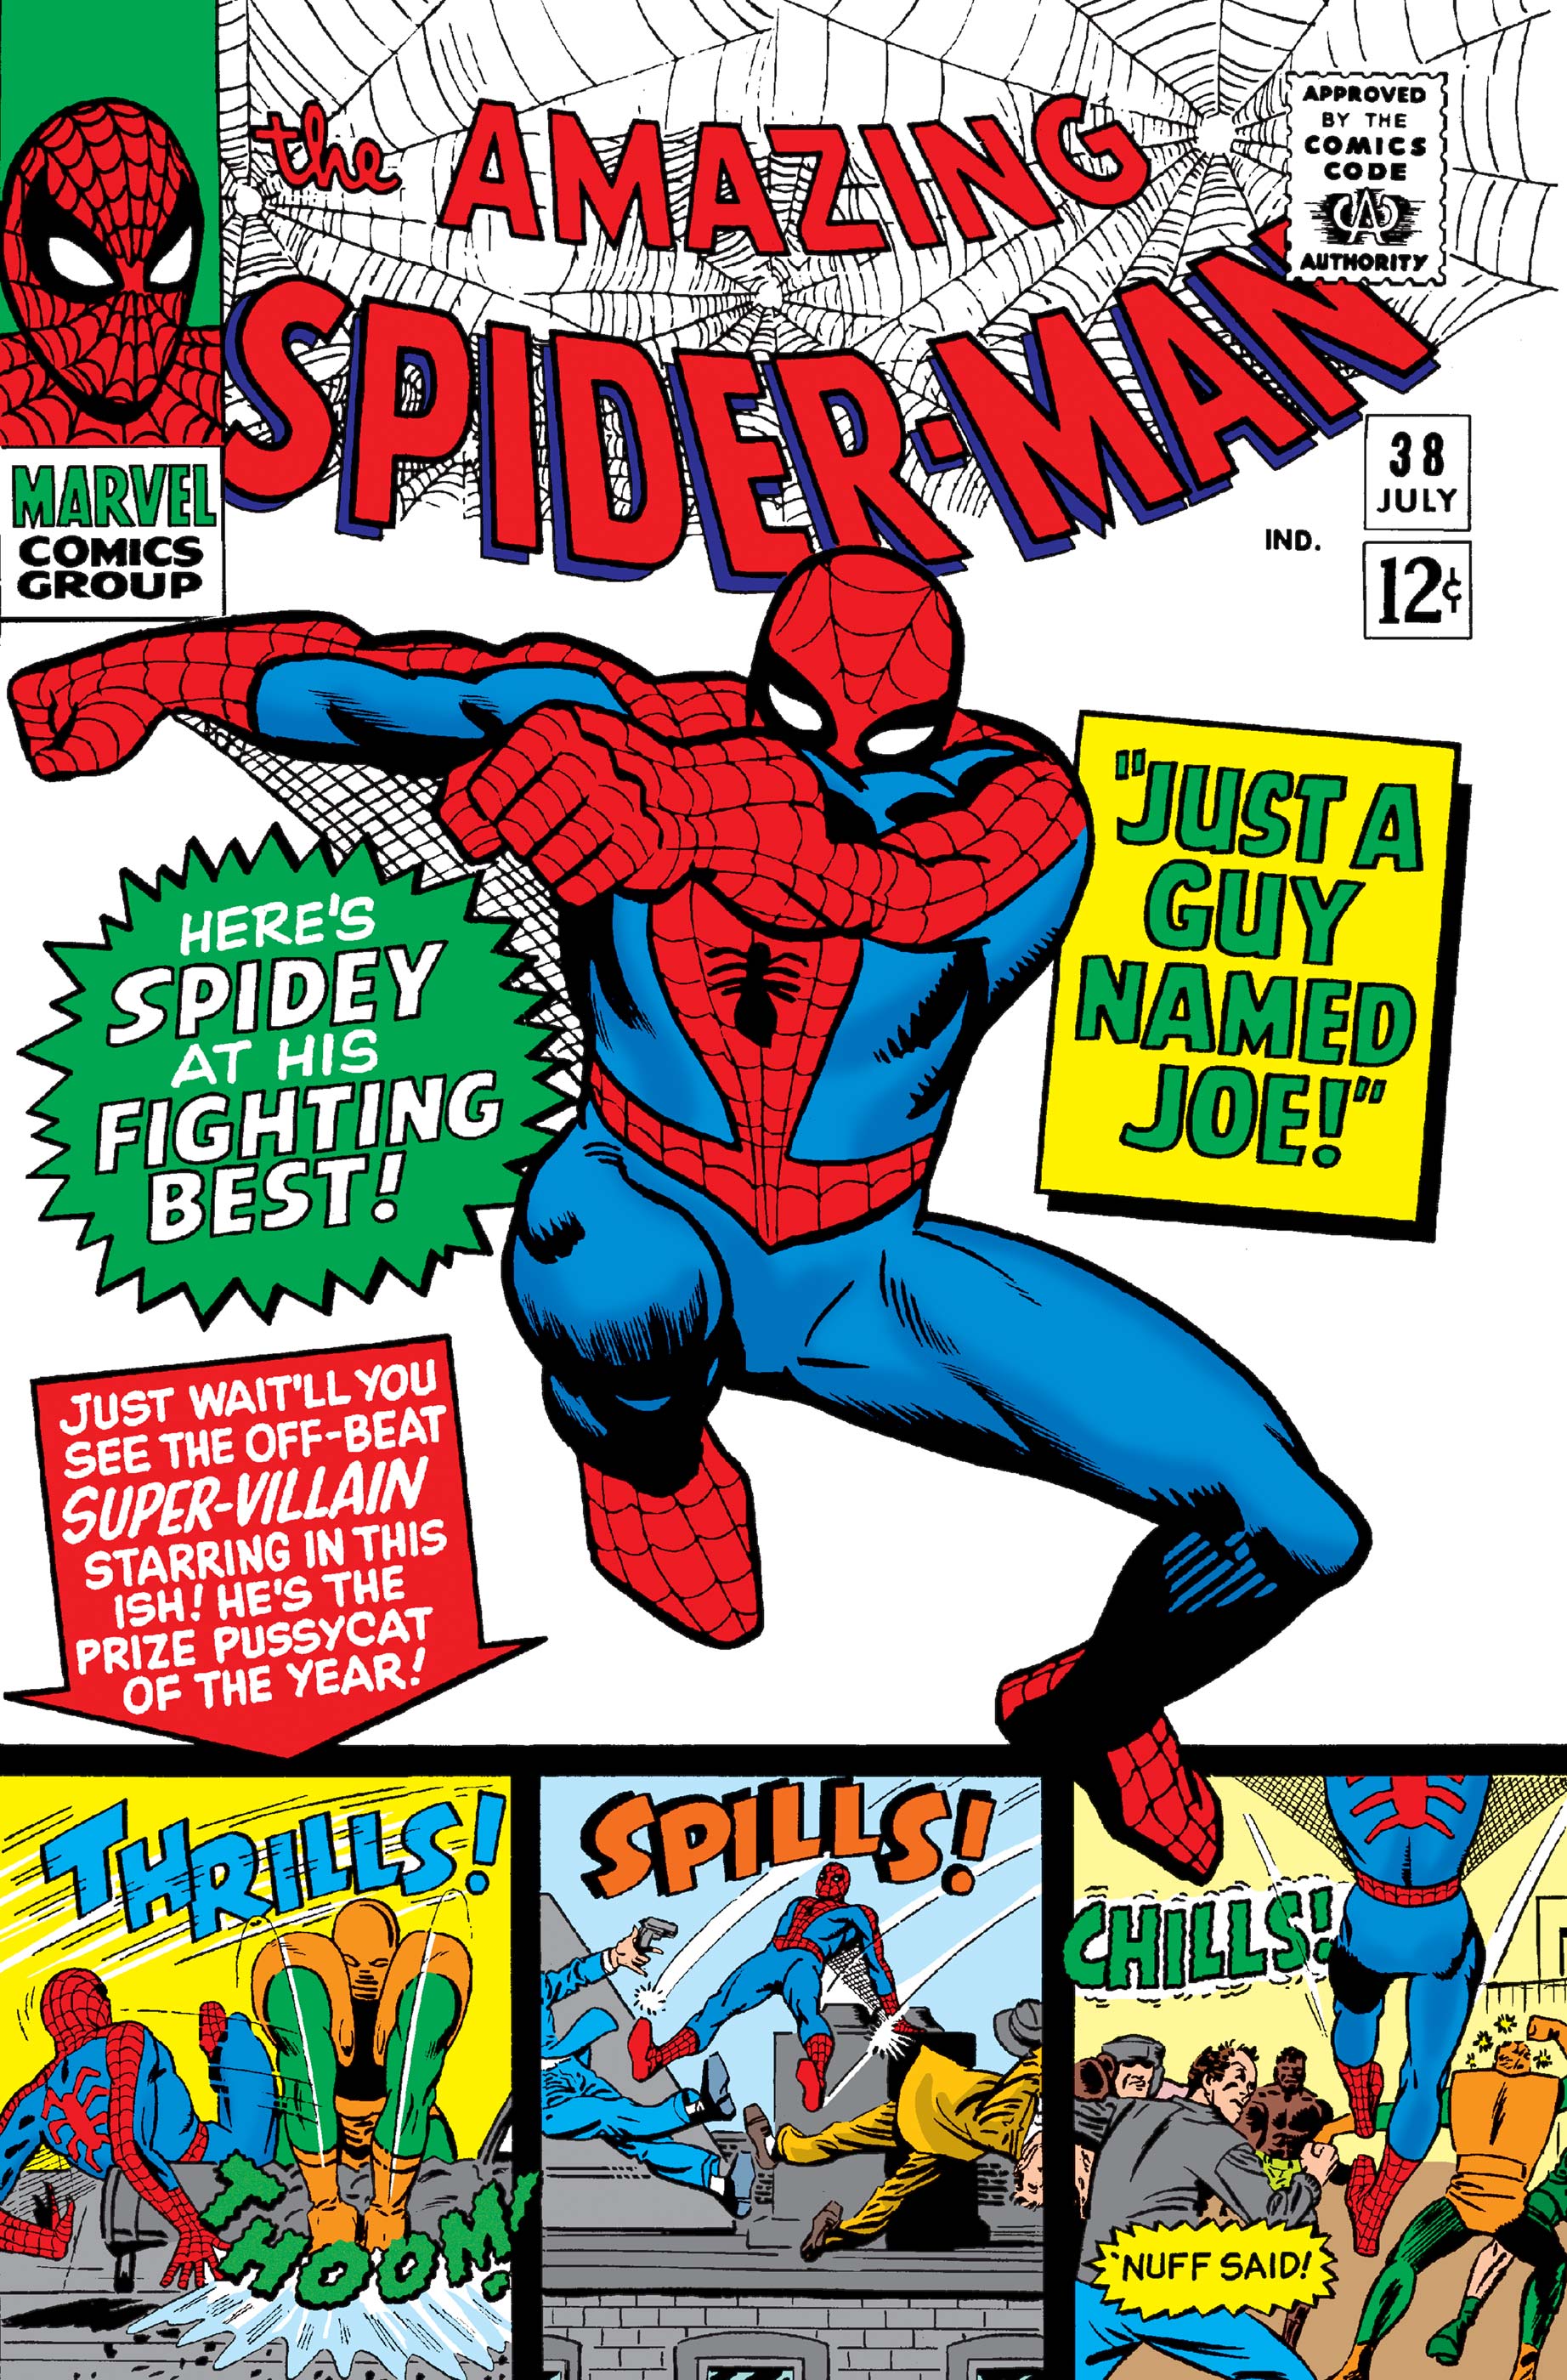 The Amazing Spider-Man (1963) #38